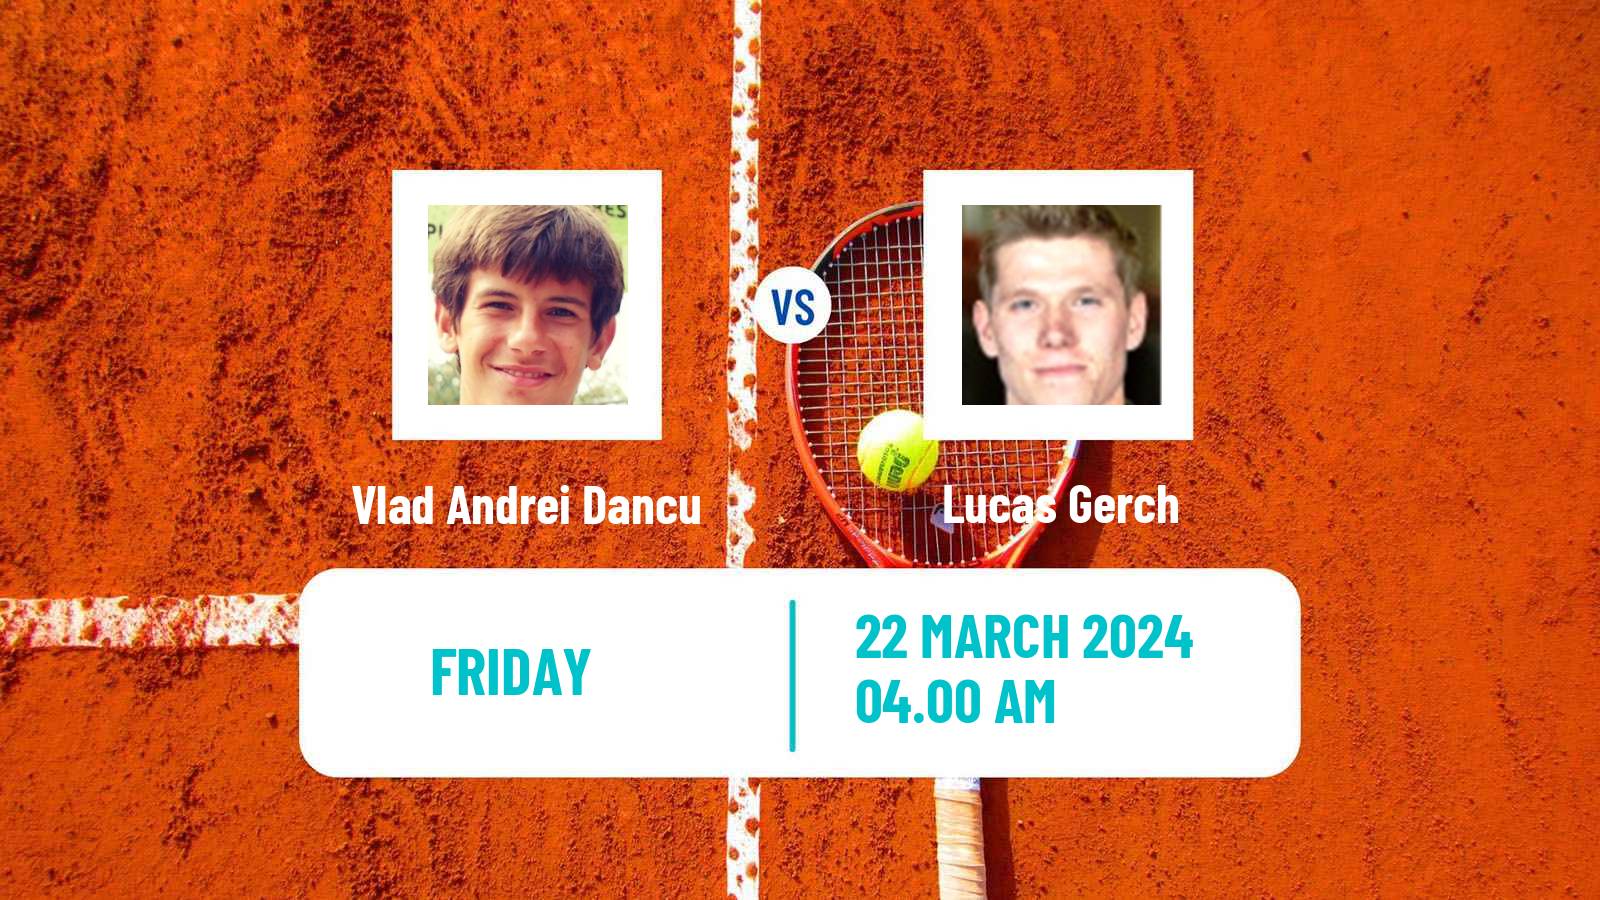 Tennis ITF M15 Alaminos Larnaca 2 Men Vlad Andrei Dancu - Lucas Gerch